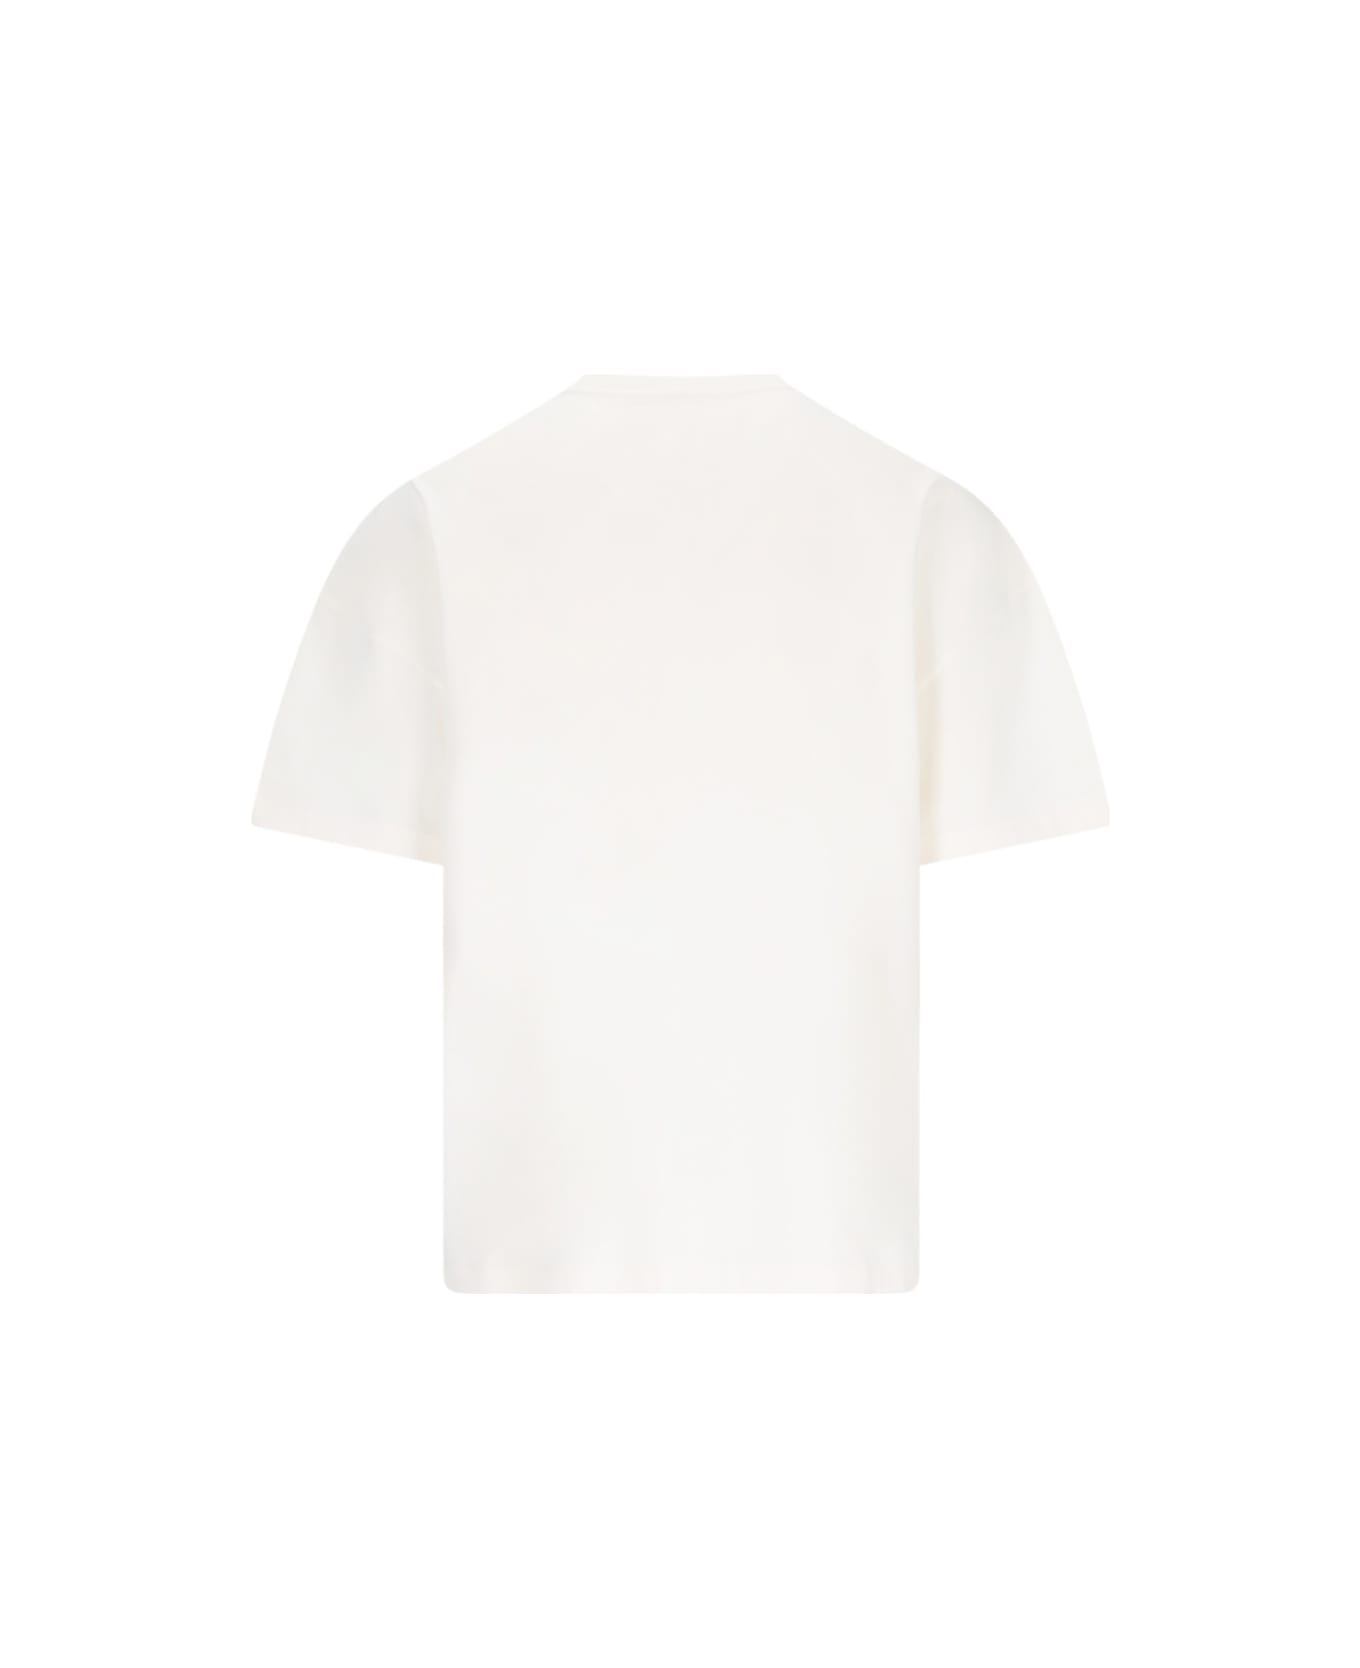 Jil Sander Logo Print T-shirt - White